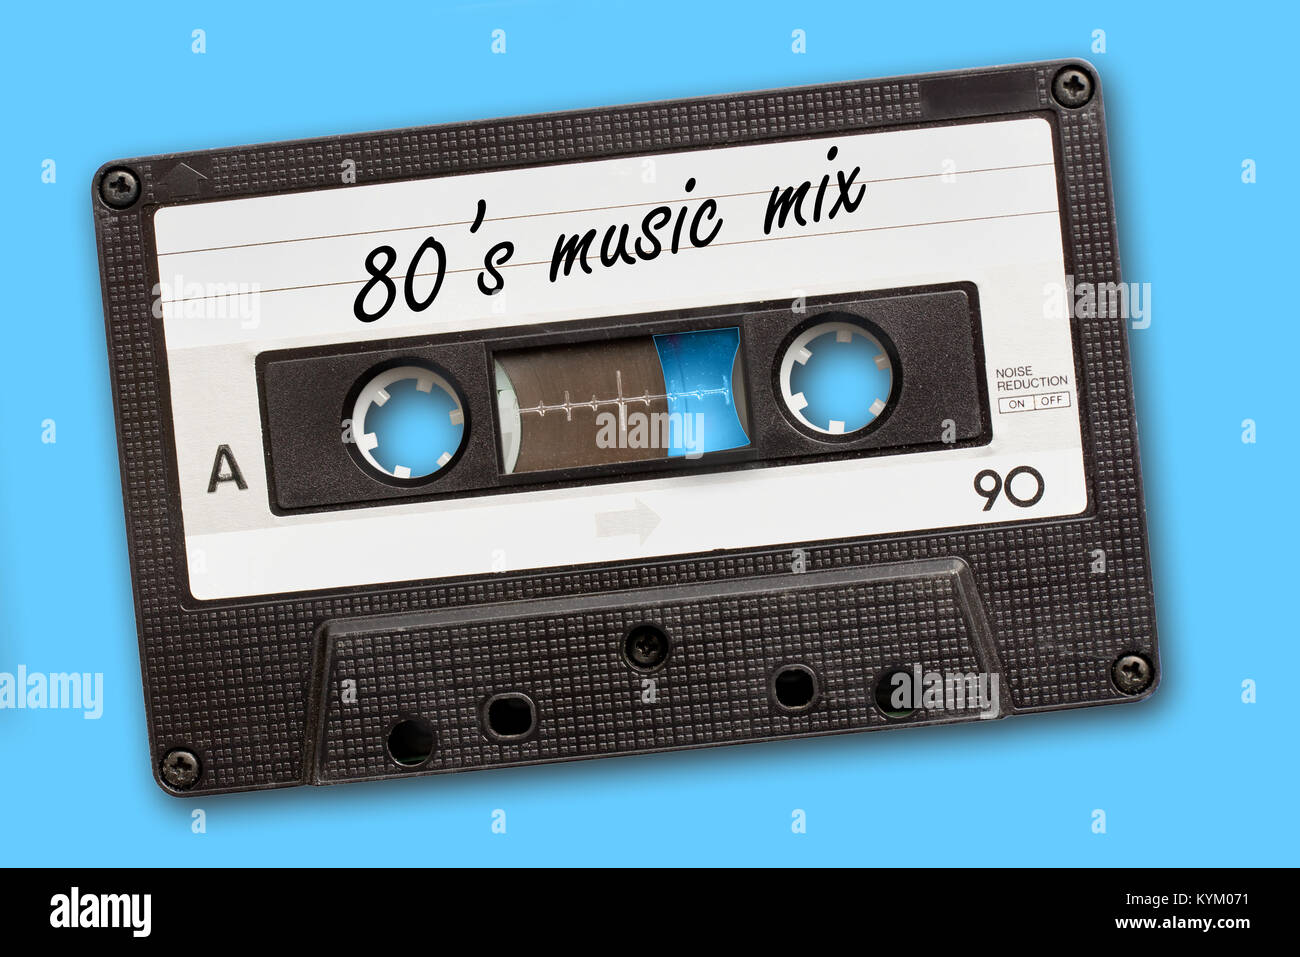 80's music mix written on vintage audio cassette tape, blue background Stock Photo